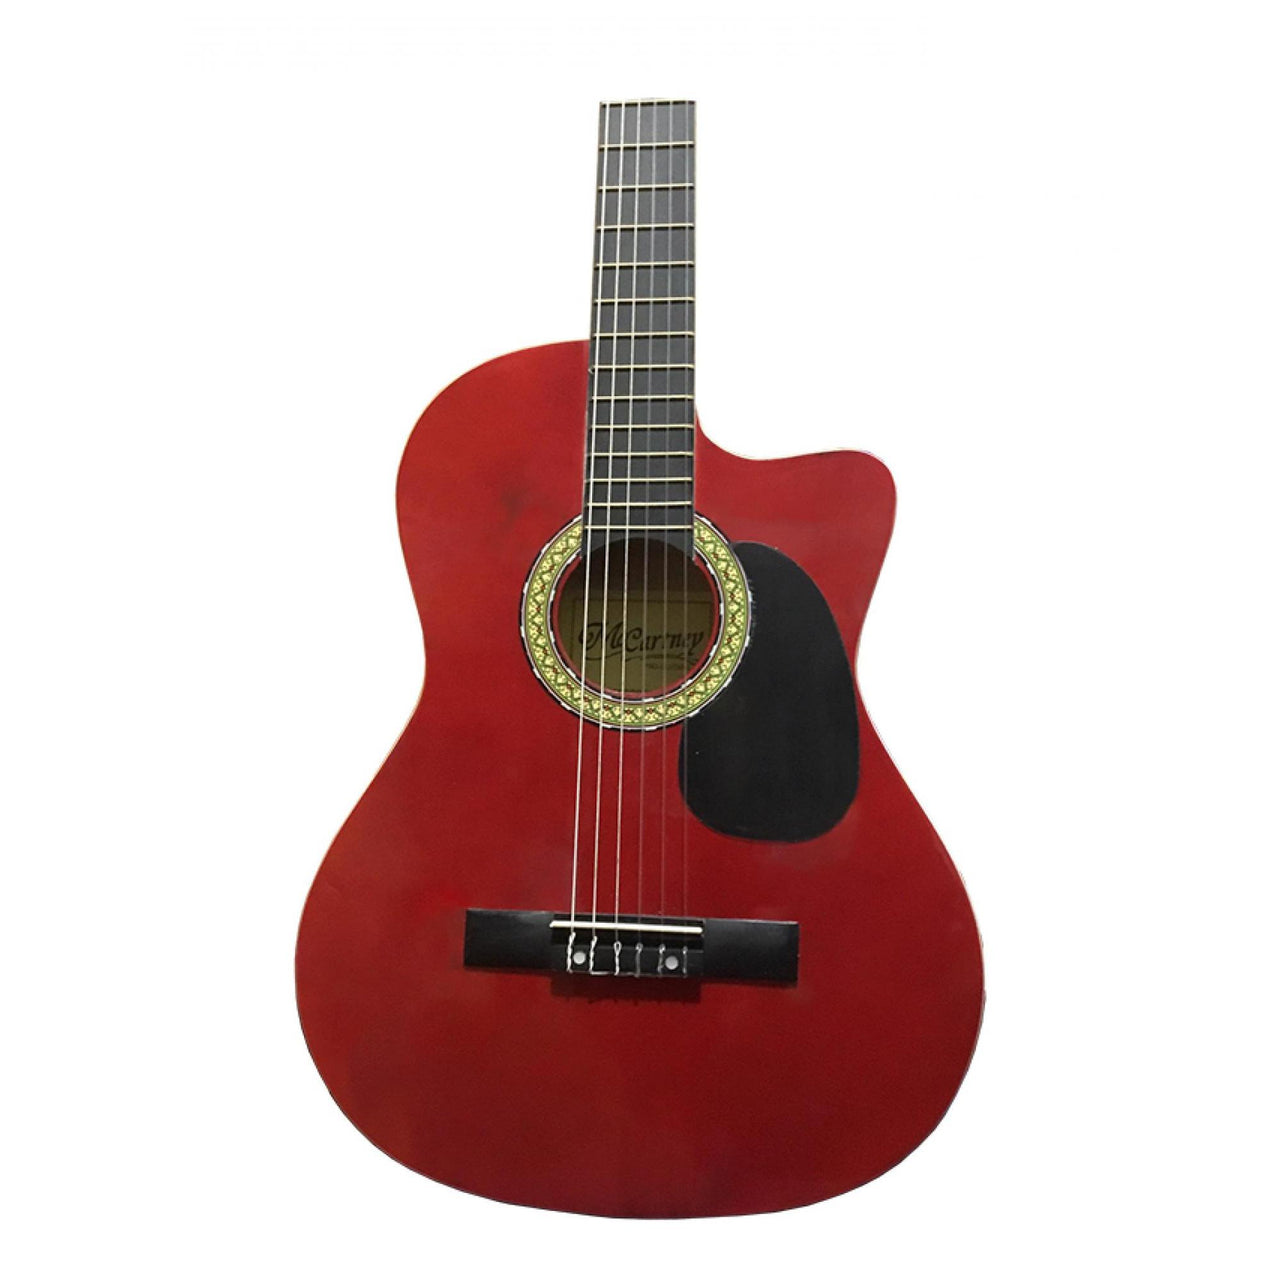 Guitarra Electroacustica Mc Cartney Cdas. Nylon Rojo, Cg-851ce/n Rd